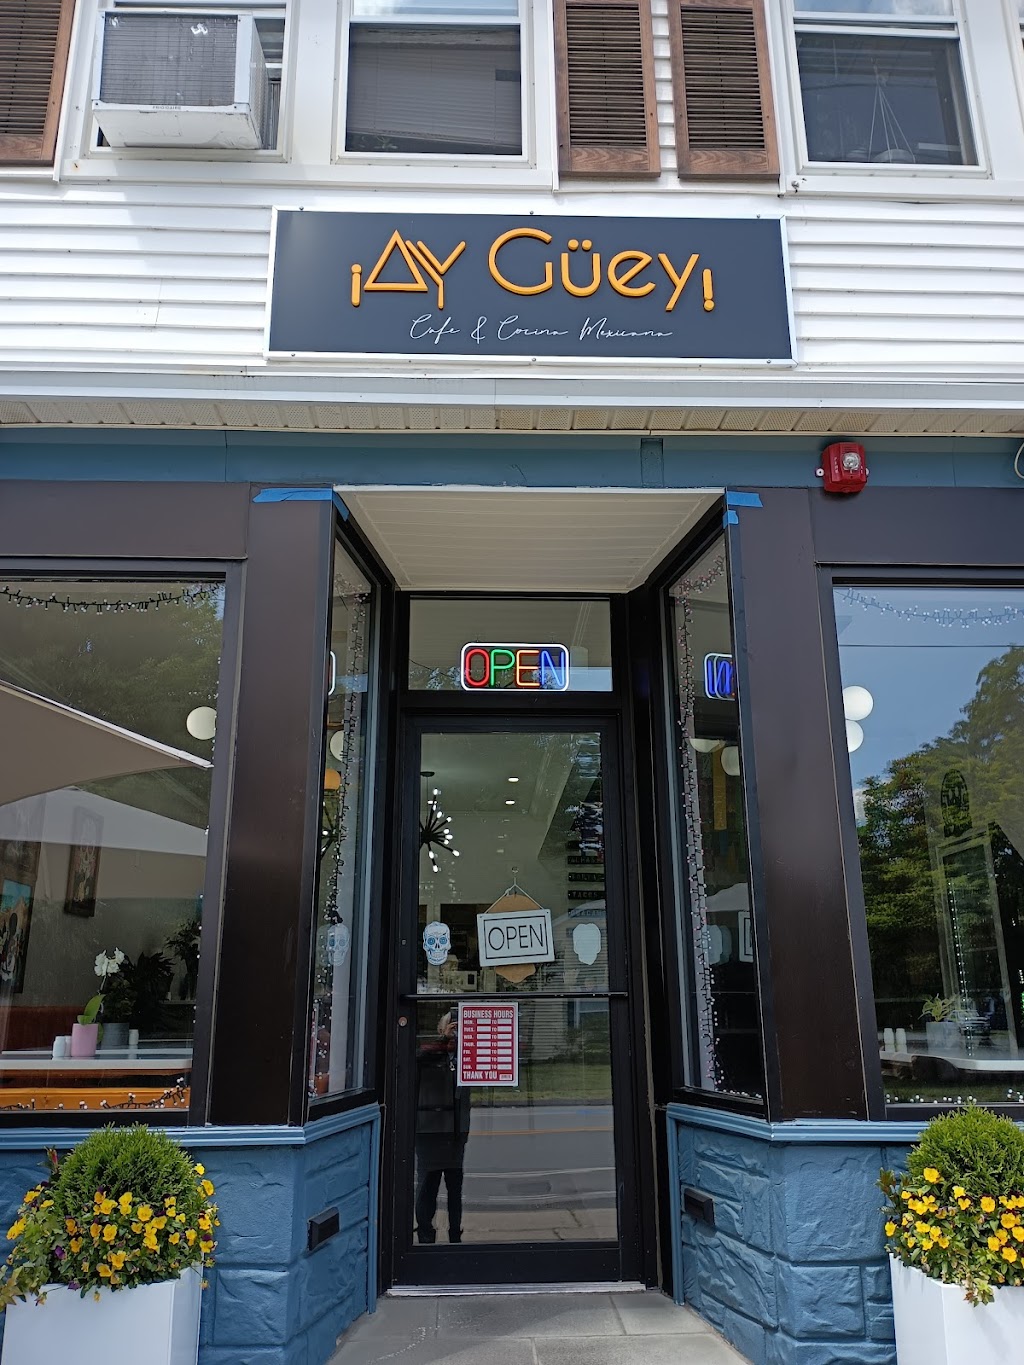 ¡Ay Güey! Cafe & Cocina Mexicana | 613 E Main St, Stratford, CT 06614 | Phone: (475) 449-9143